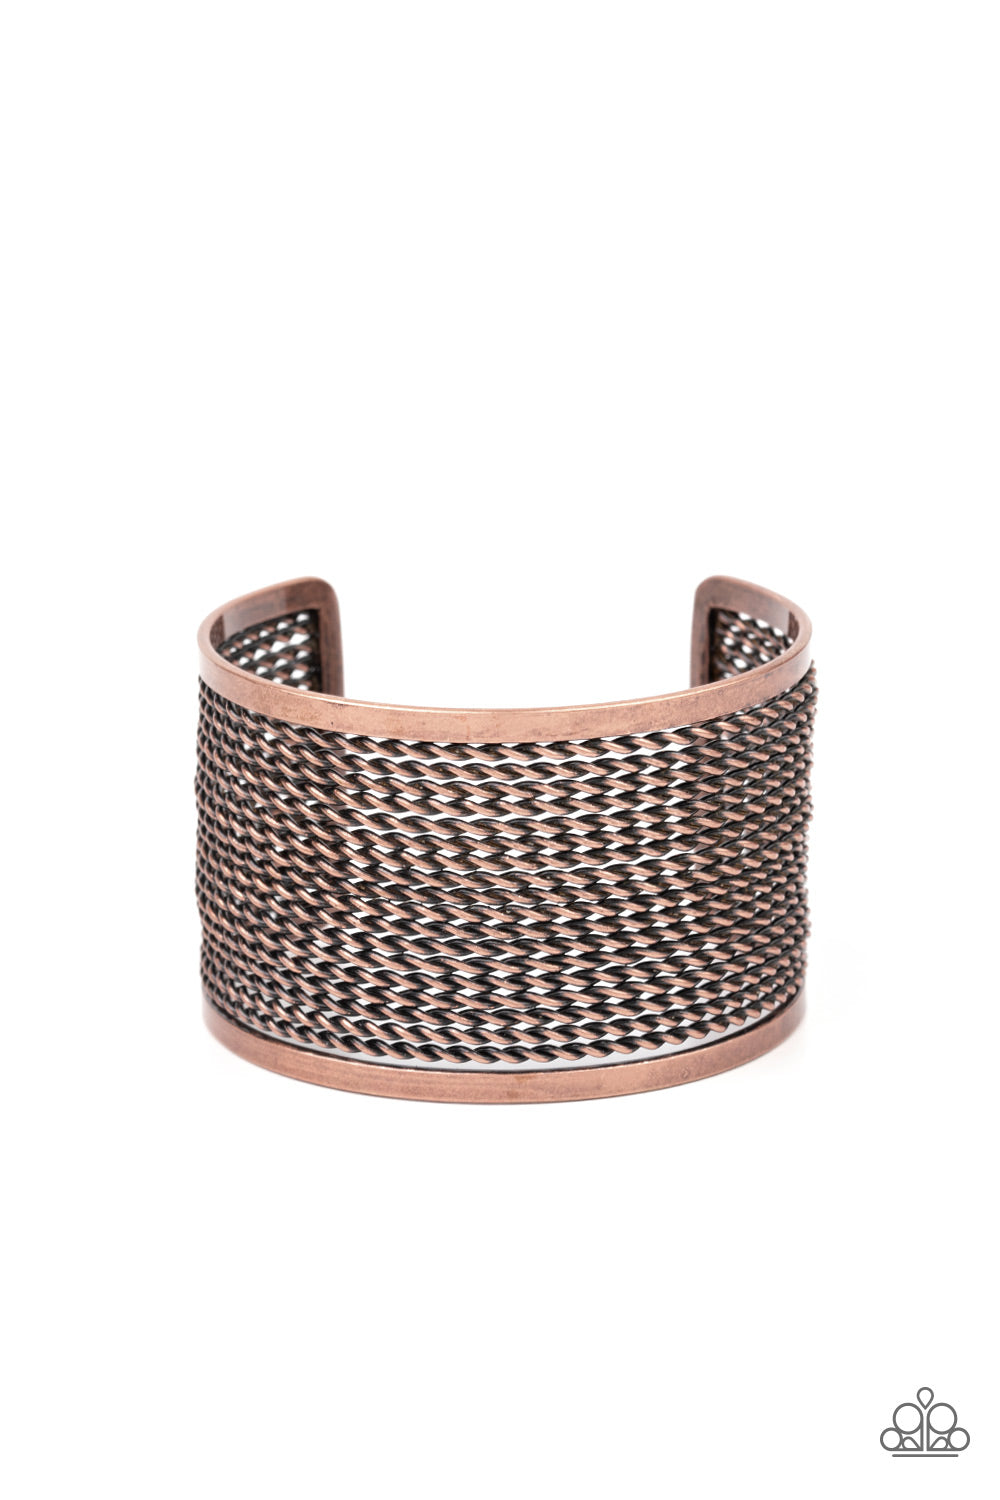 Stacked Sensation - Copper cuff bracelet